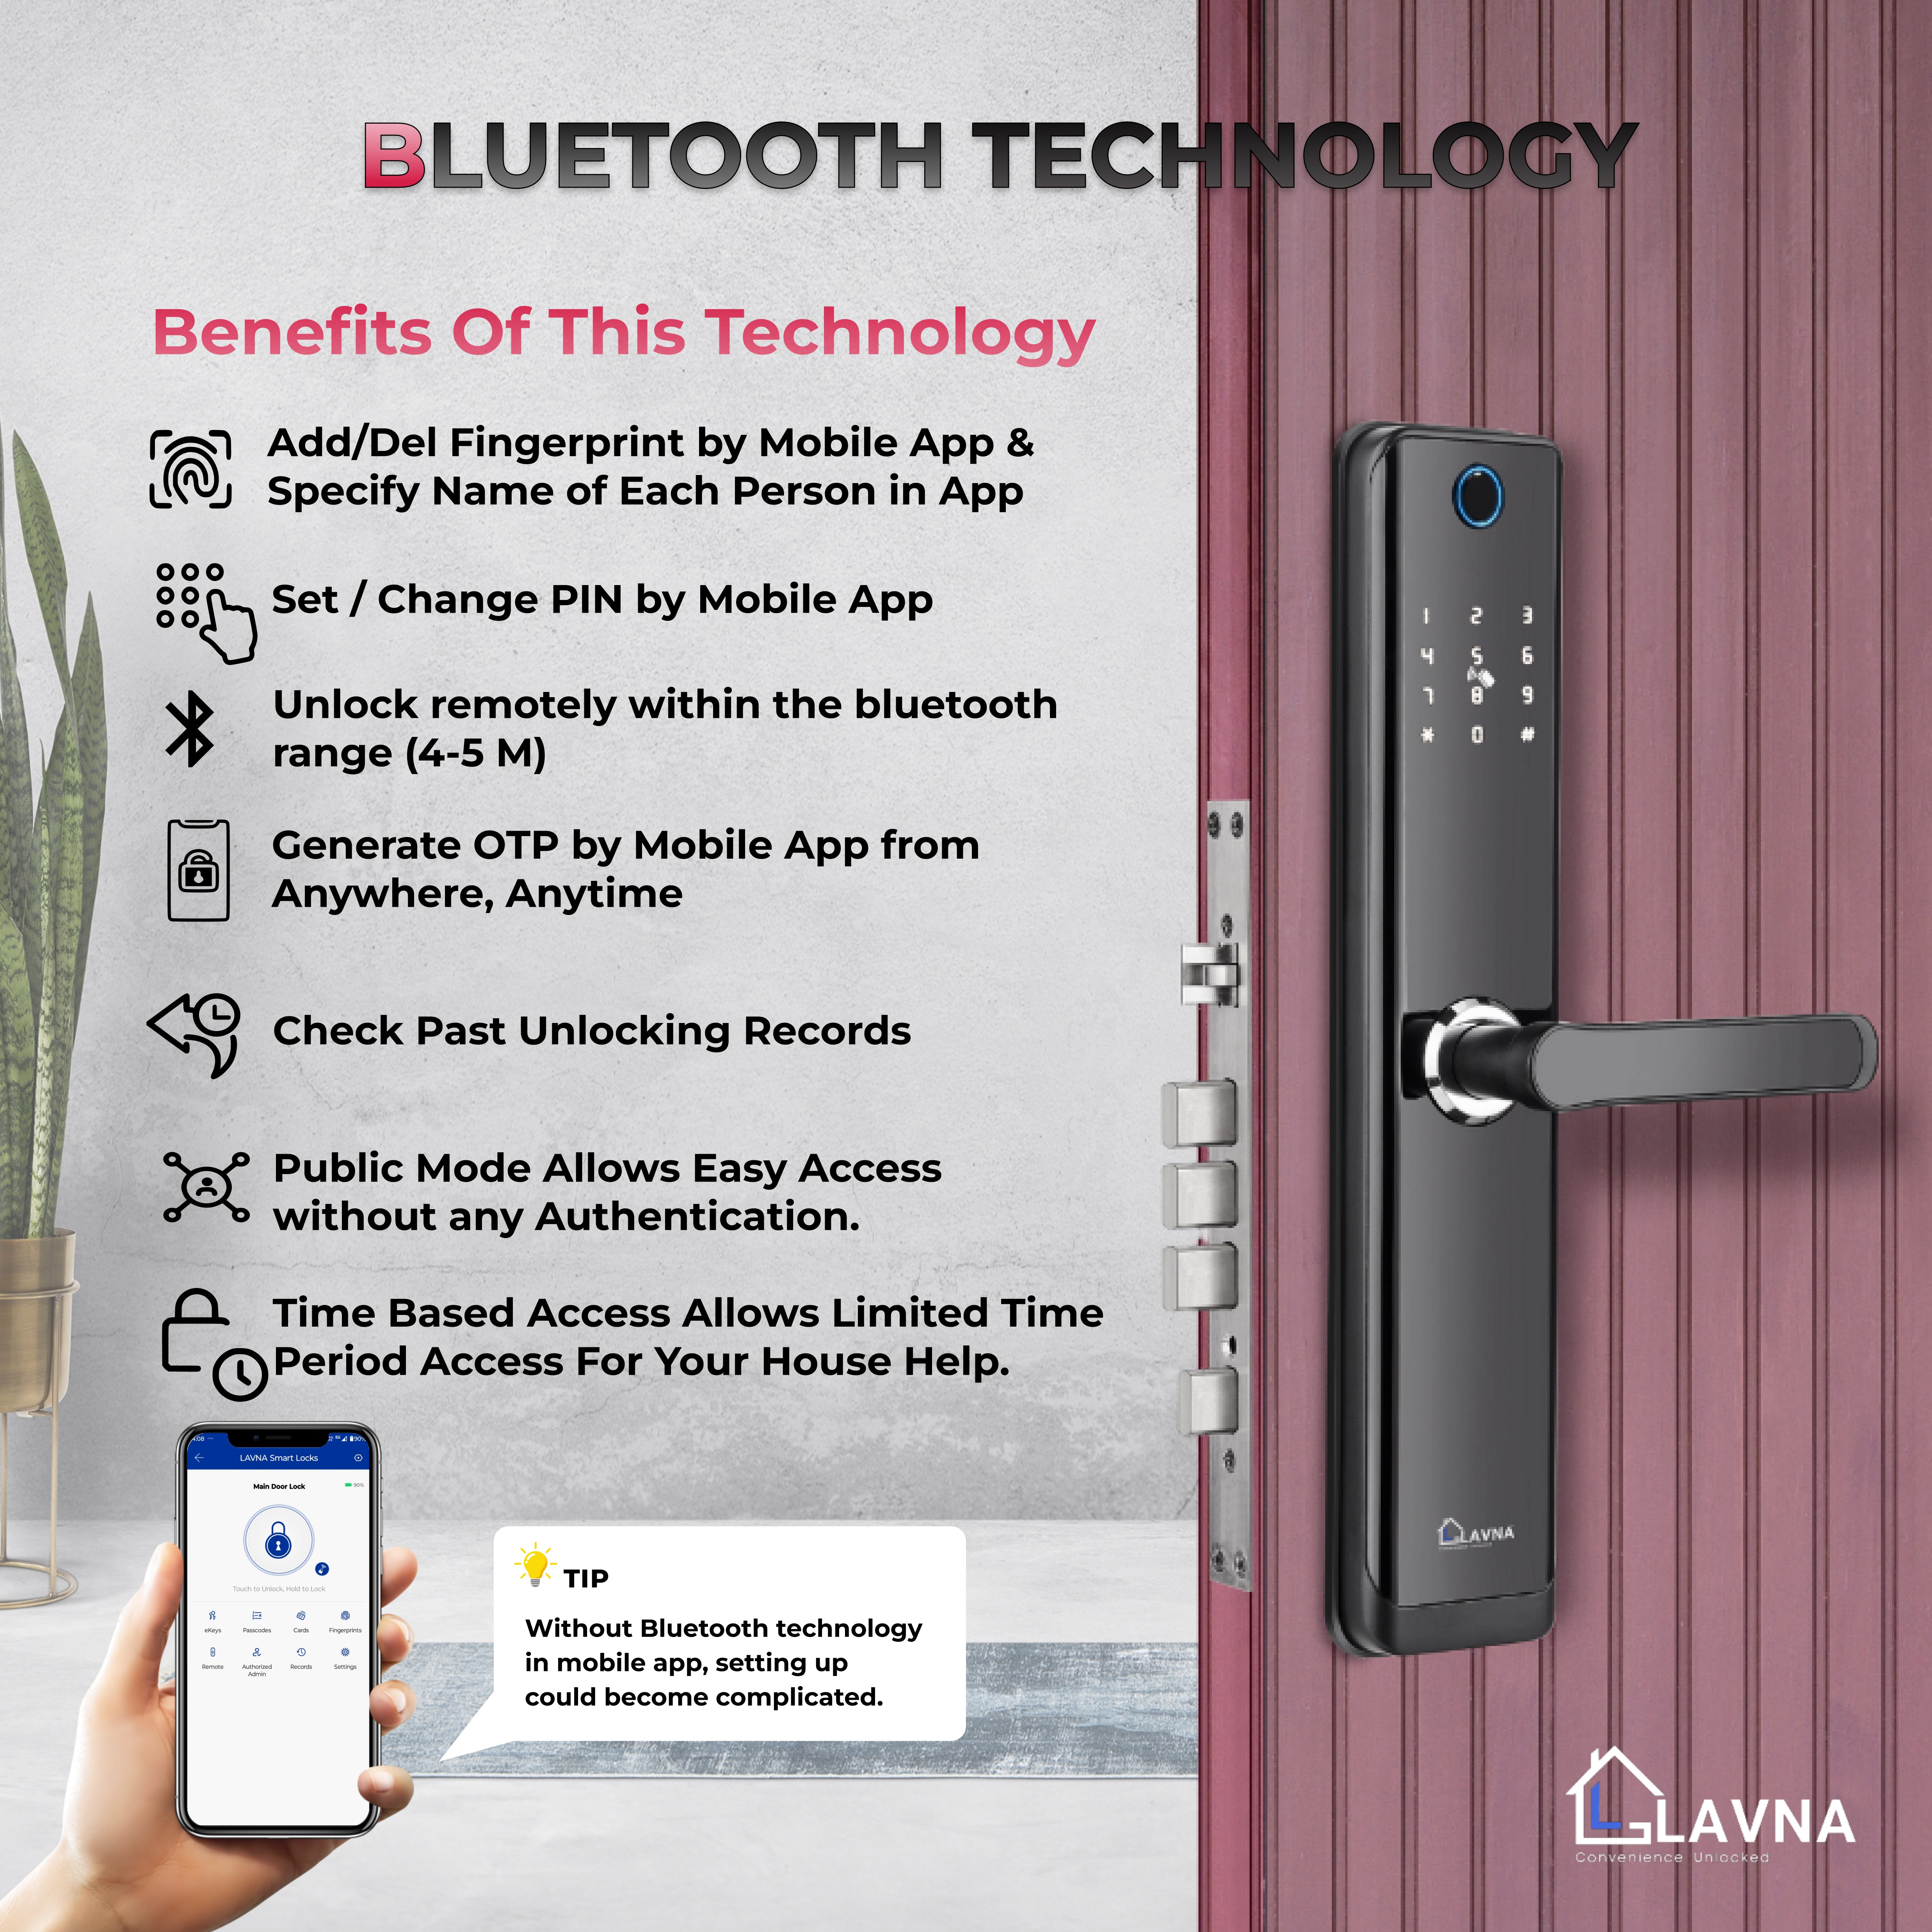 LAVNA LA24 Smart Door Lock with Bluetooth Mobile App, Fingerprint, OTP, PIN, RFID Card & Manual Key 6 way Access for Wooden Doors